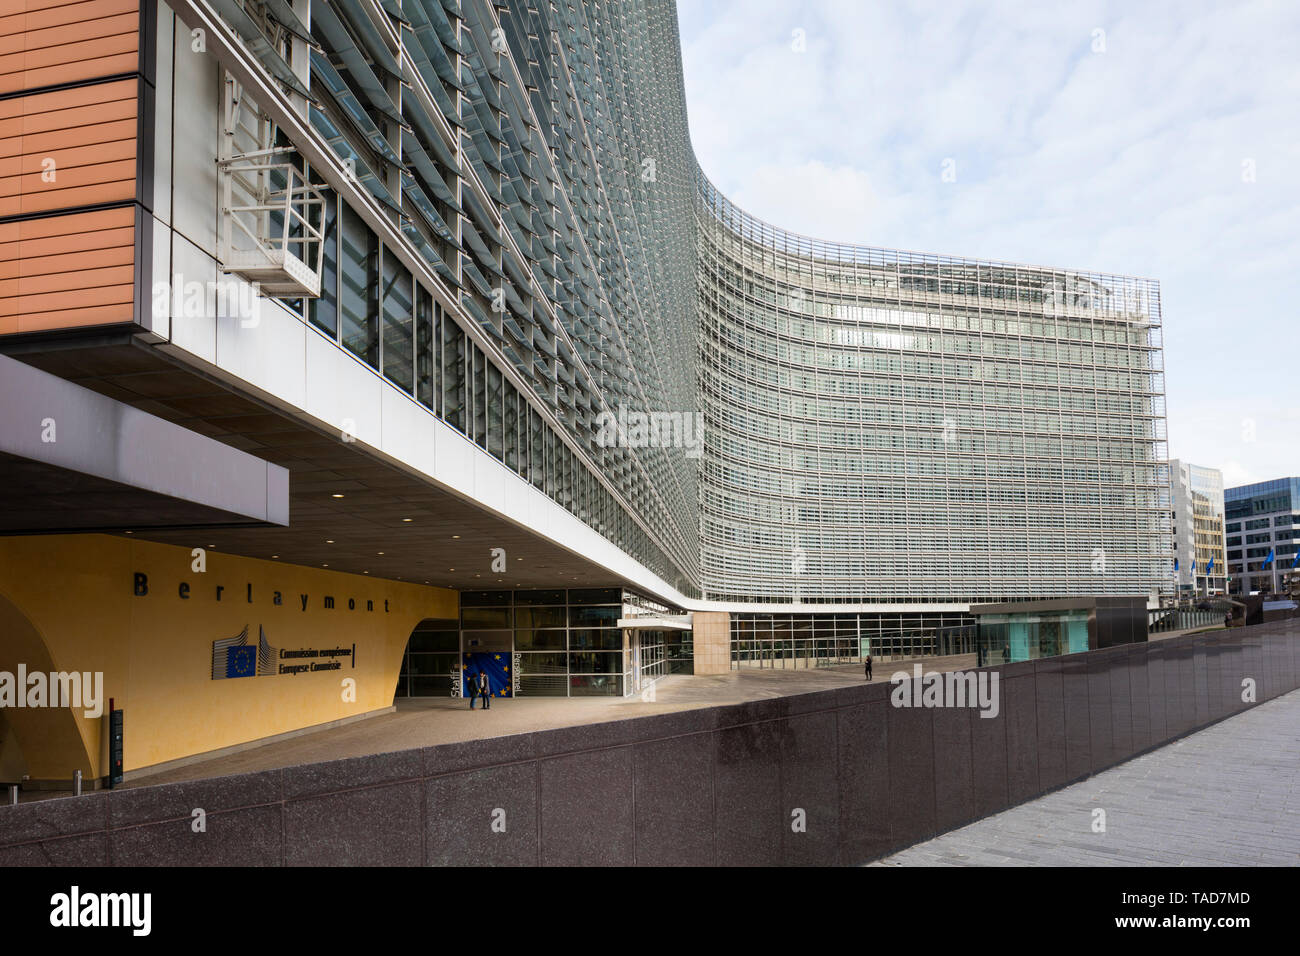 Belgium, Brussels, Berlaymont building, European Commission, administrative building of the European Union Stock Photo